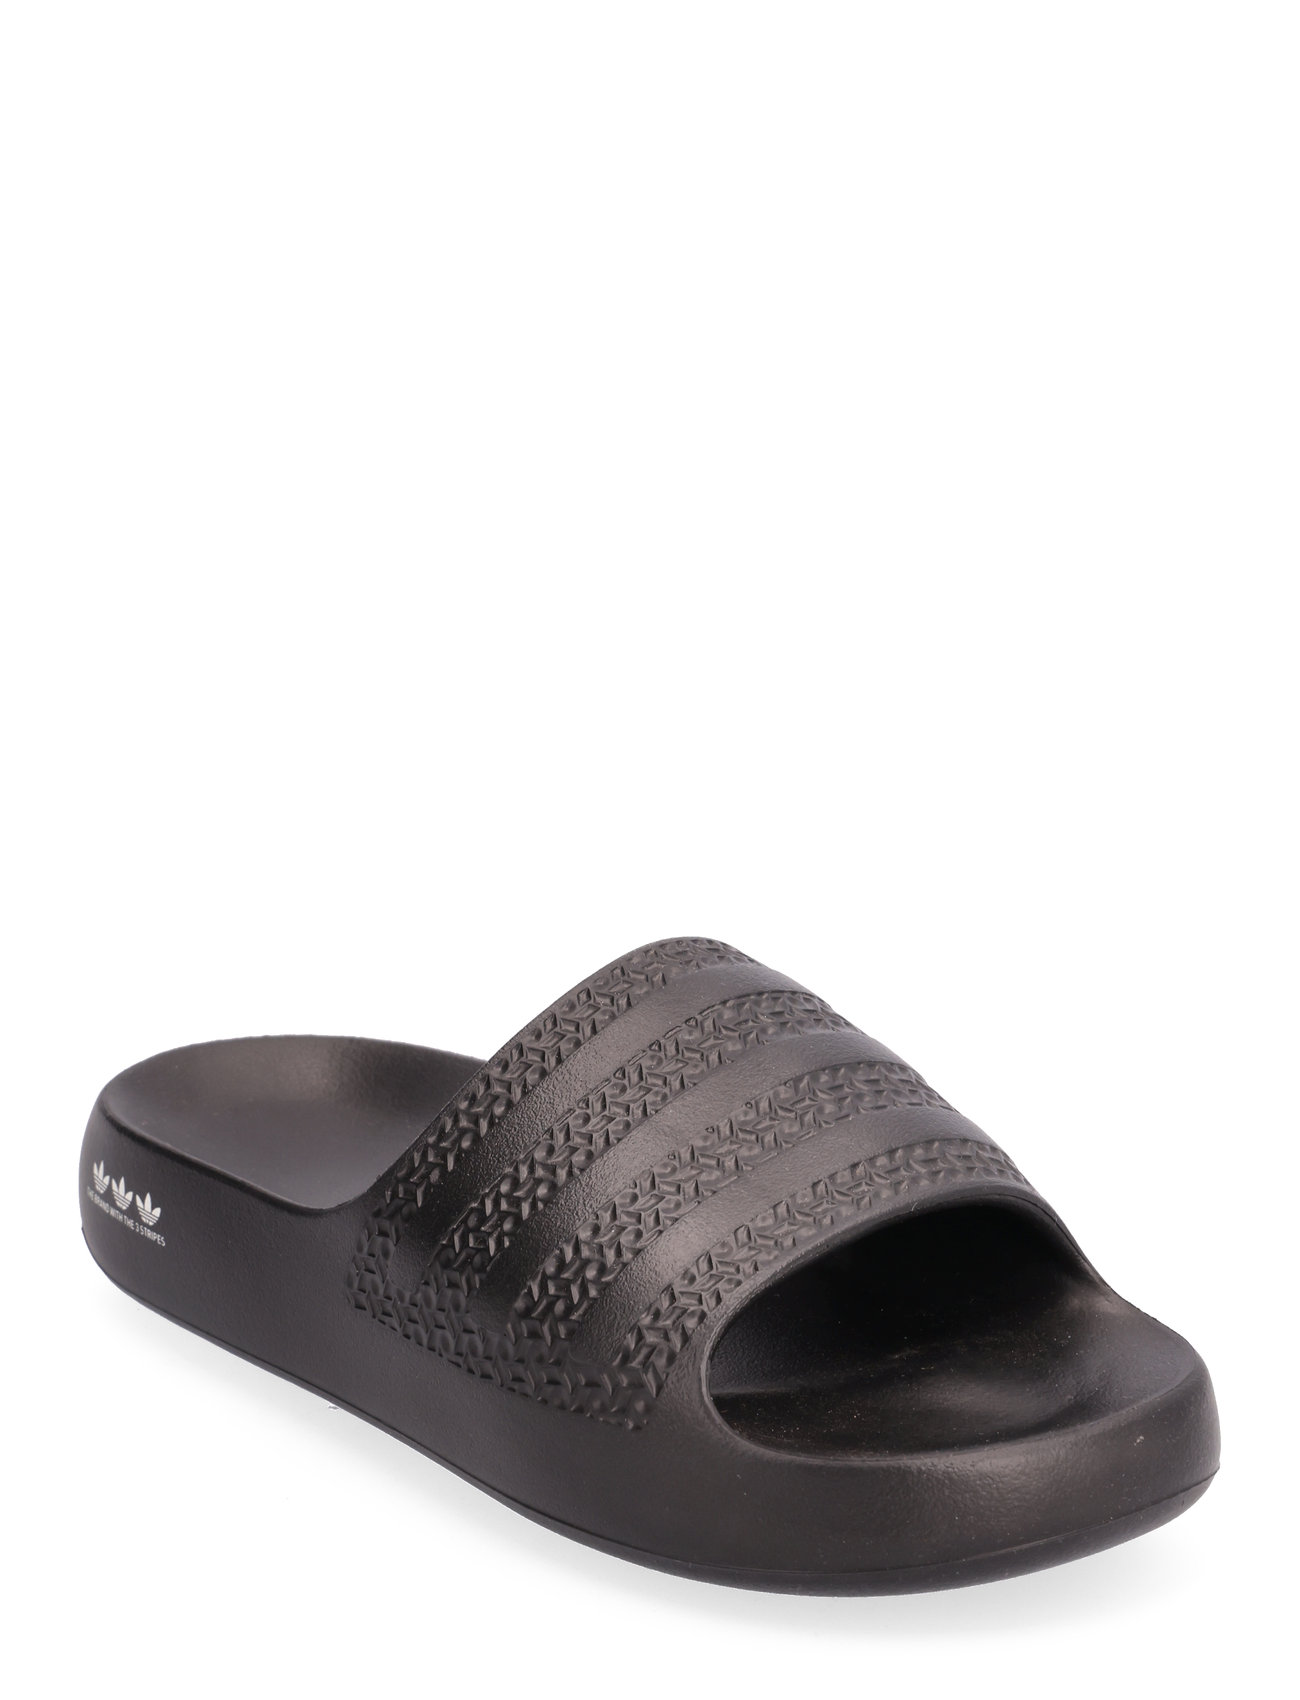 Adilette Ayoon Slides Sport Summer Shoes Sandals Pool Sliders Black Adidas Originals